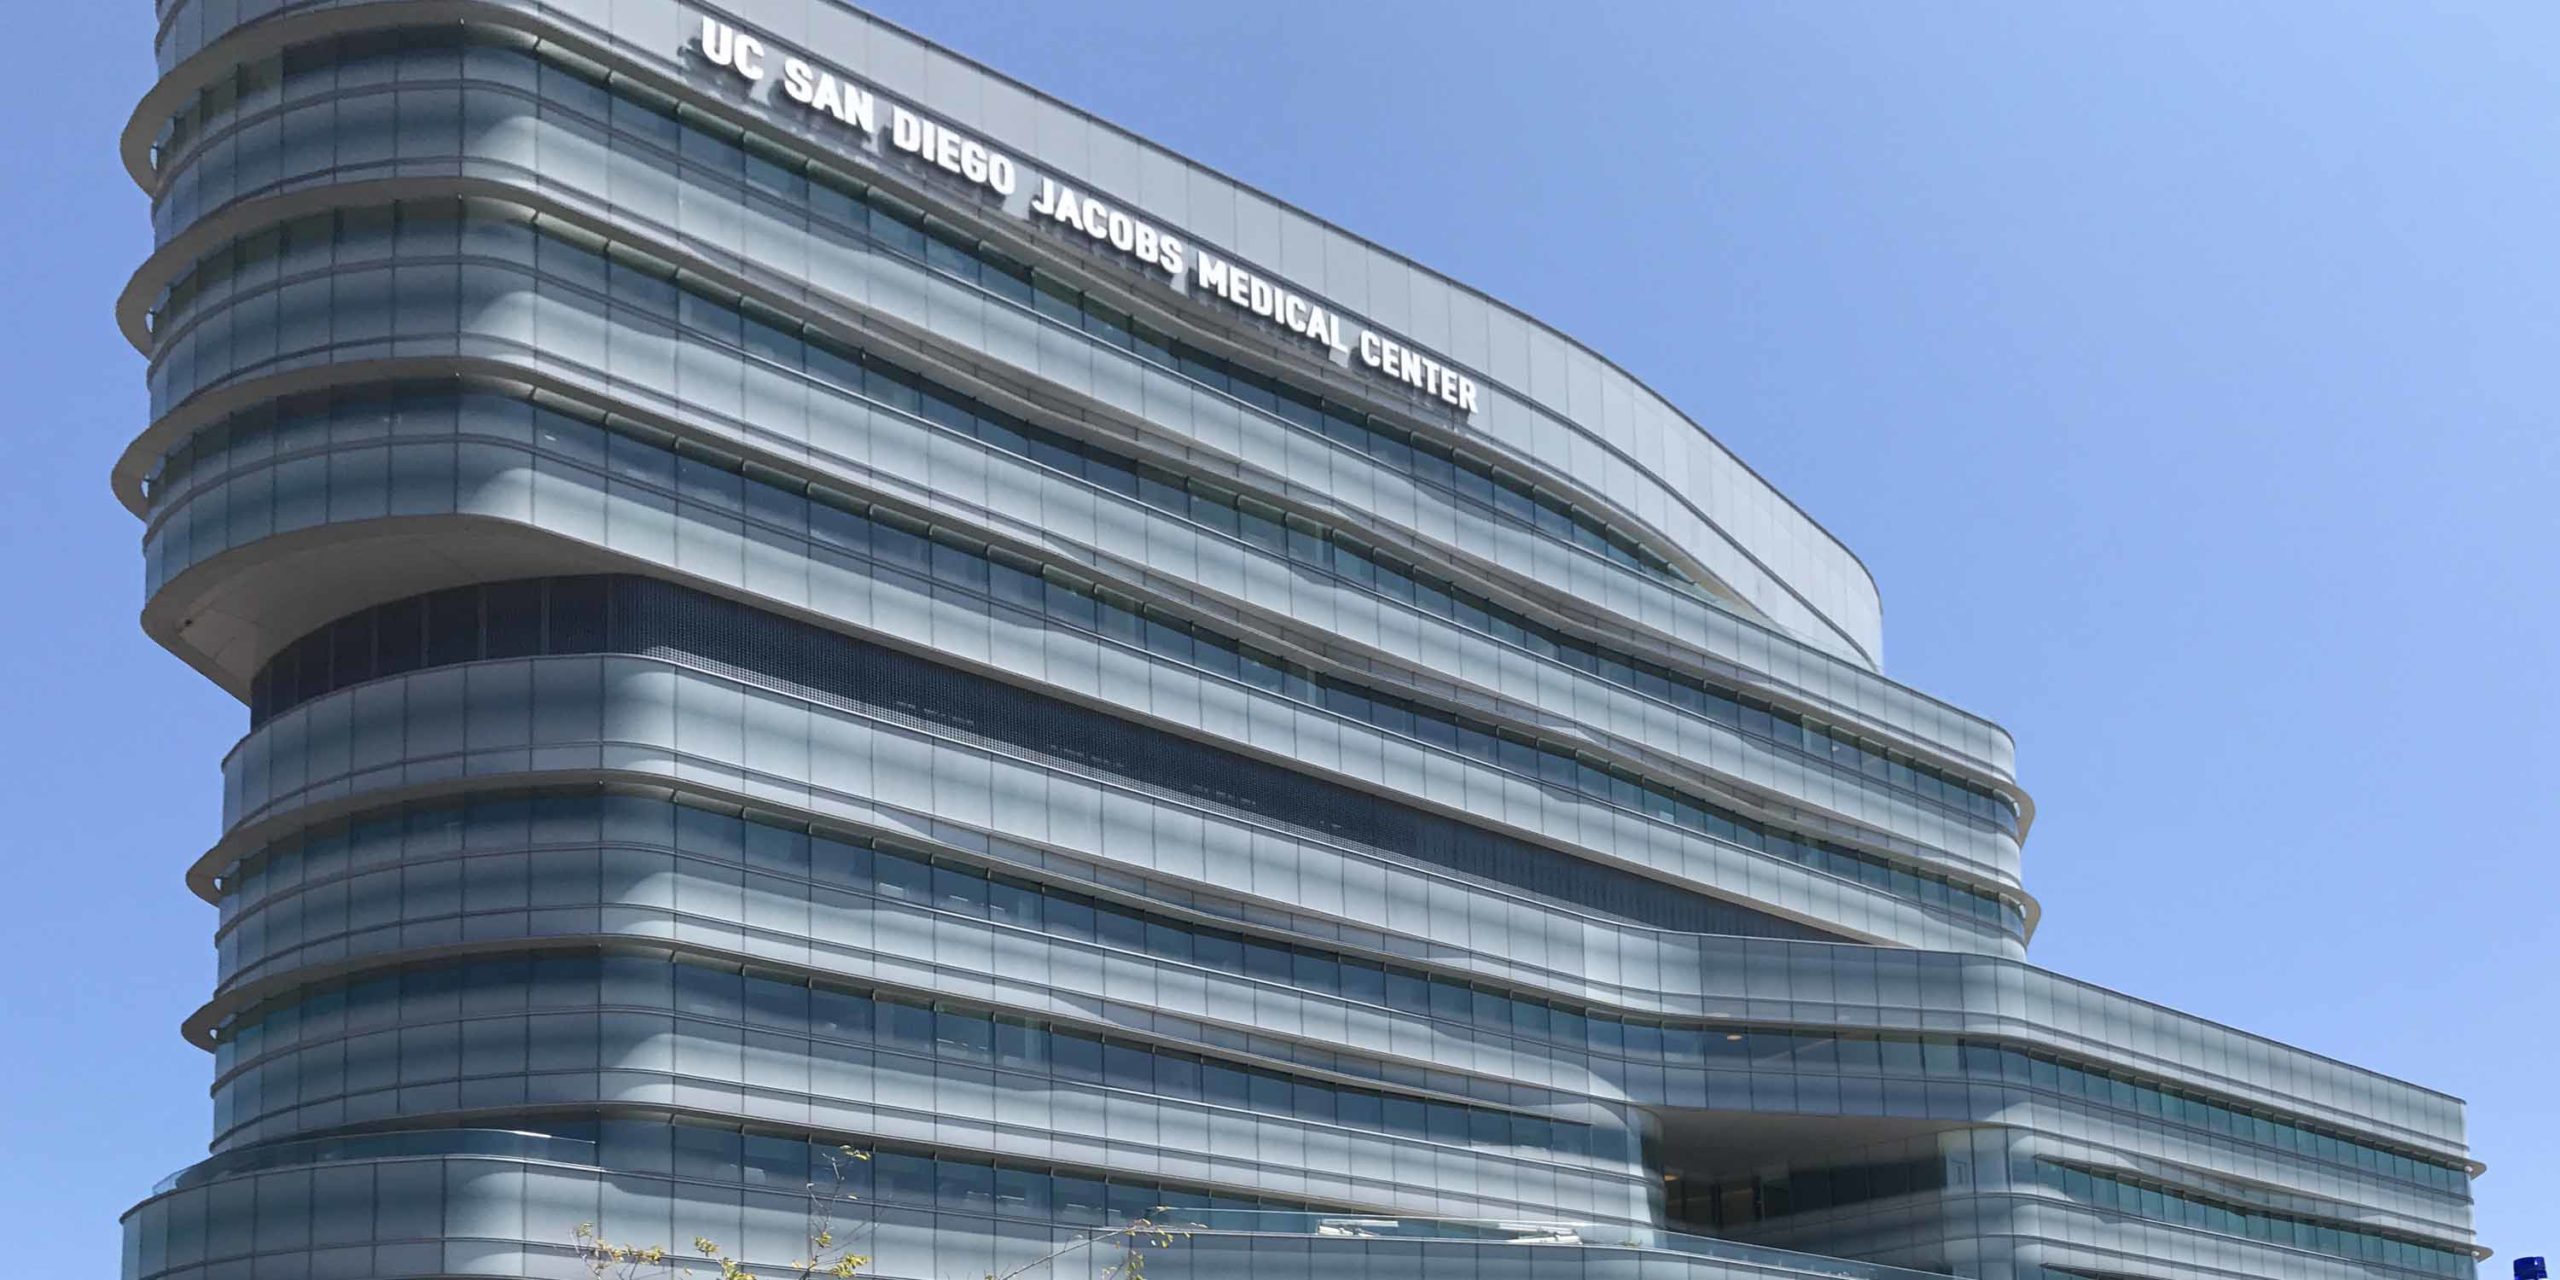 University of California San Diego: Jacobs Medical Center header image #5